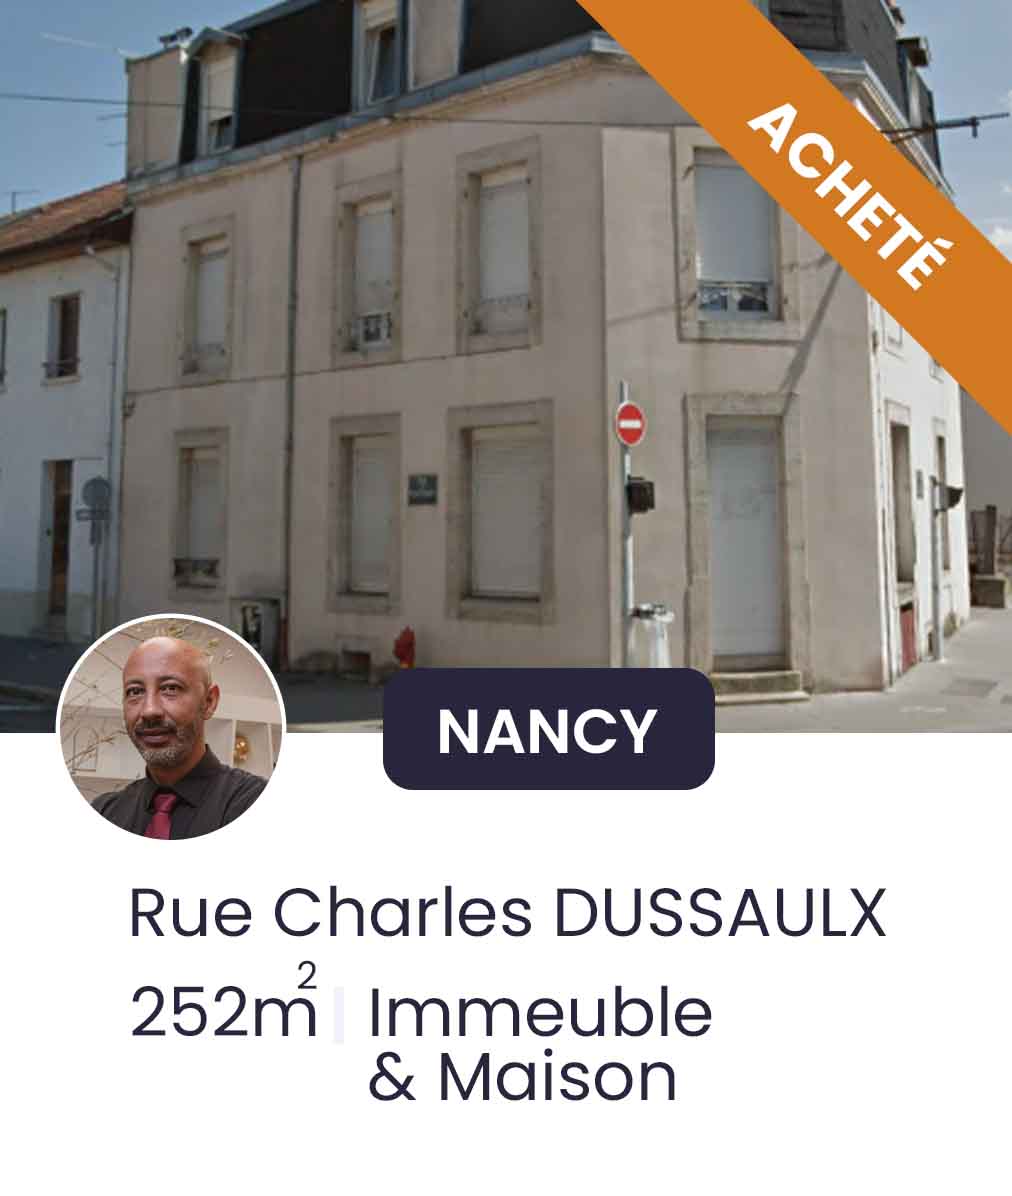 Rue charles dussaulx Nancy